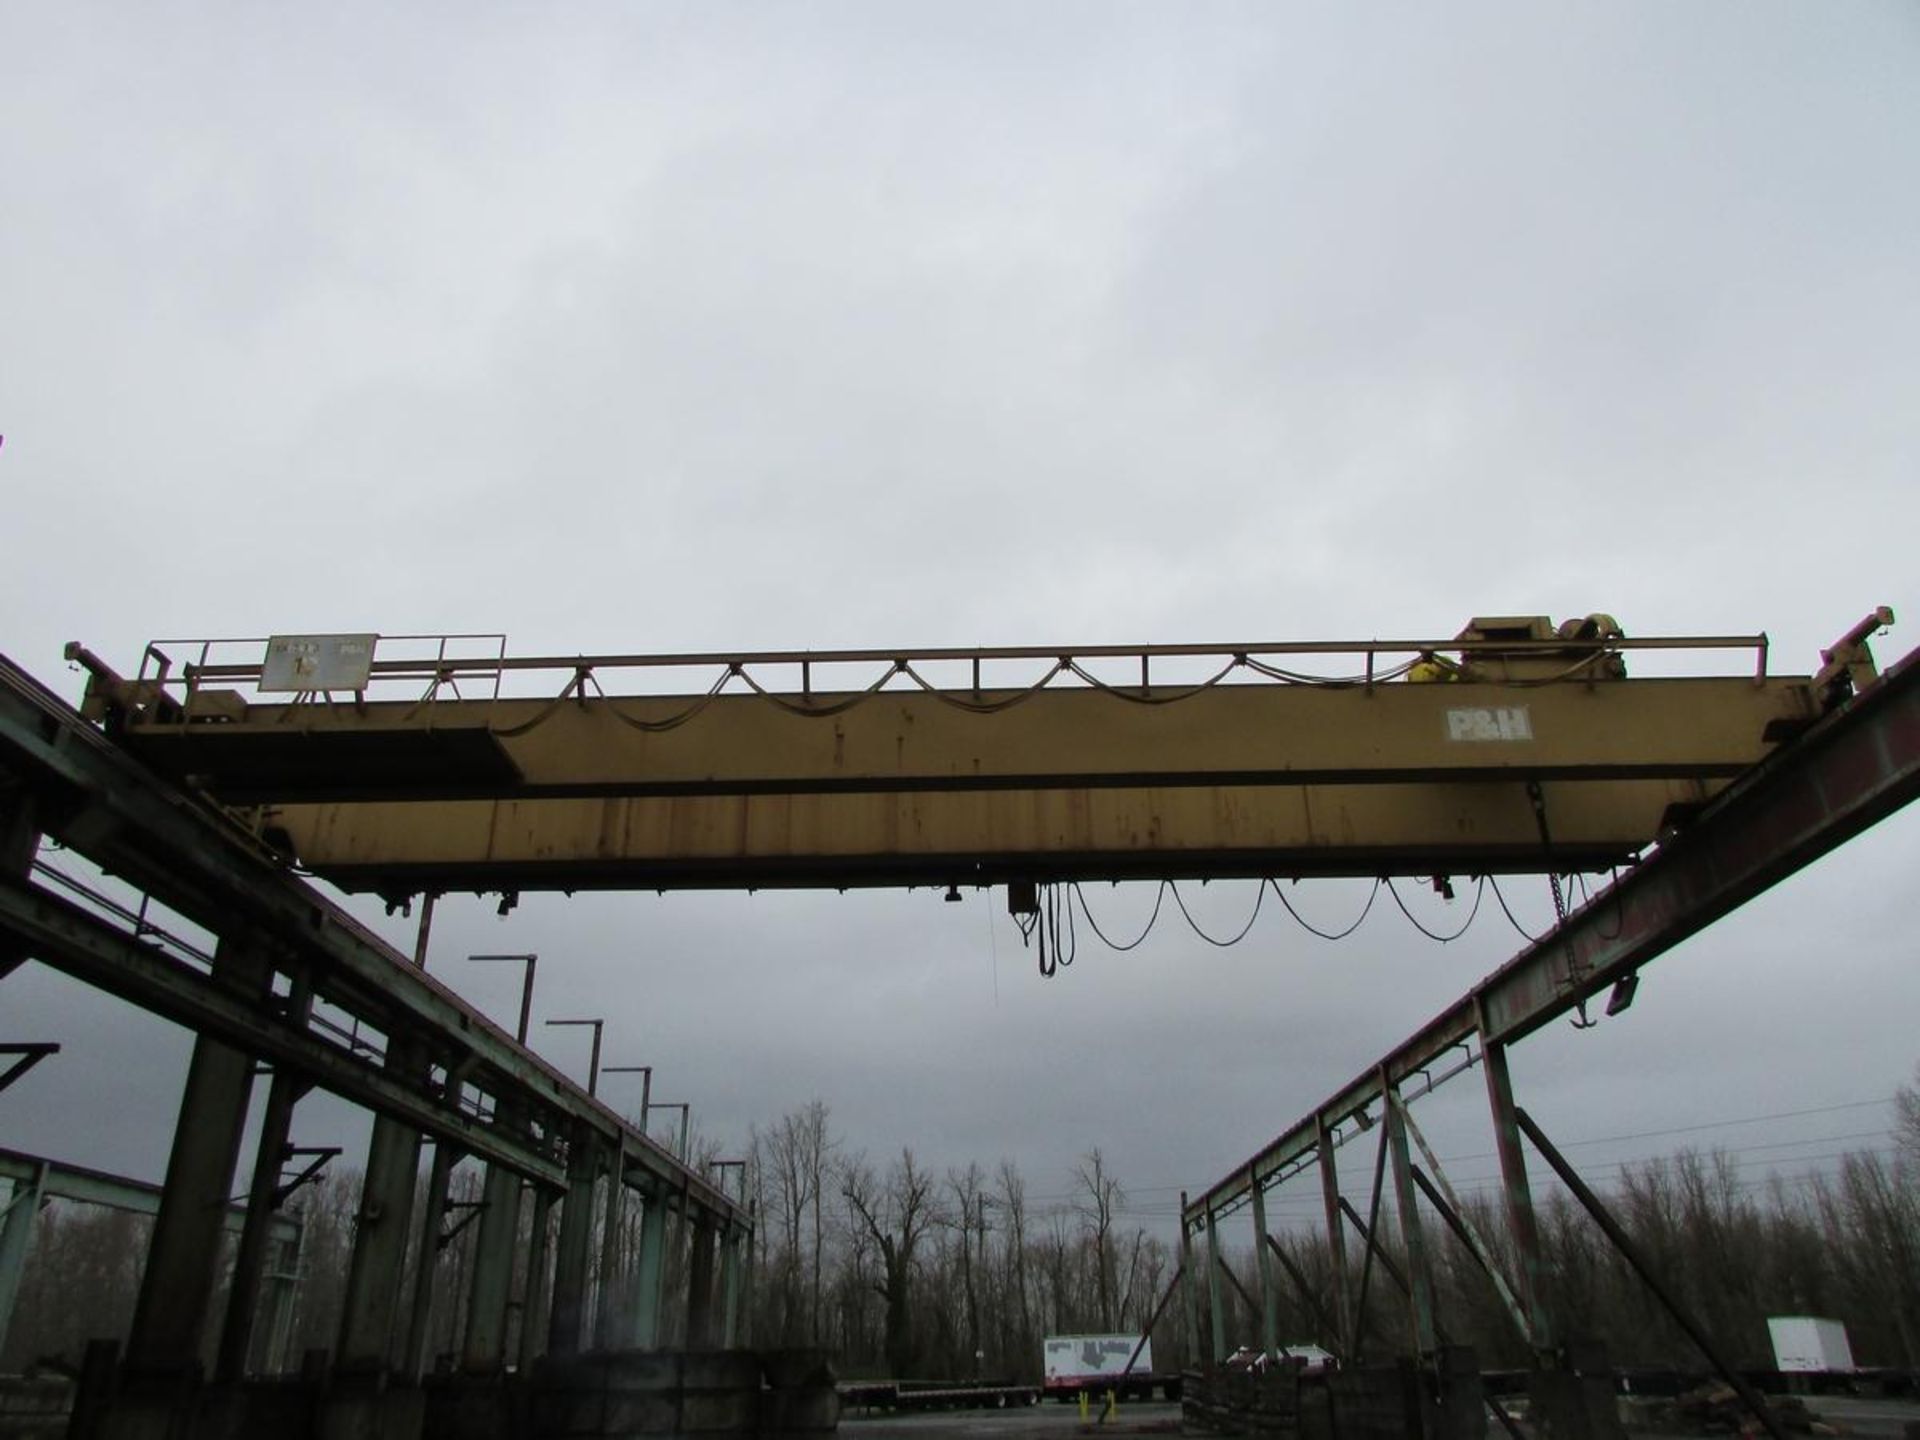 P&H 10 Ton Top Running Double Girder Bridge Crane